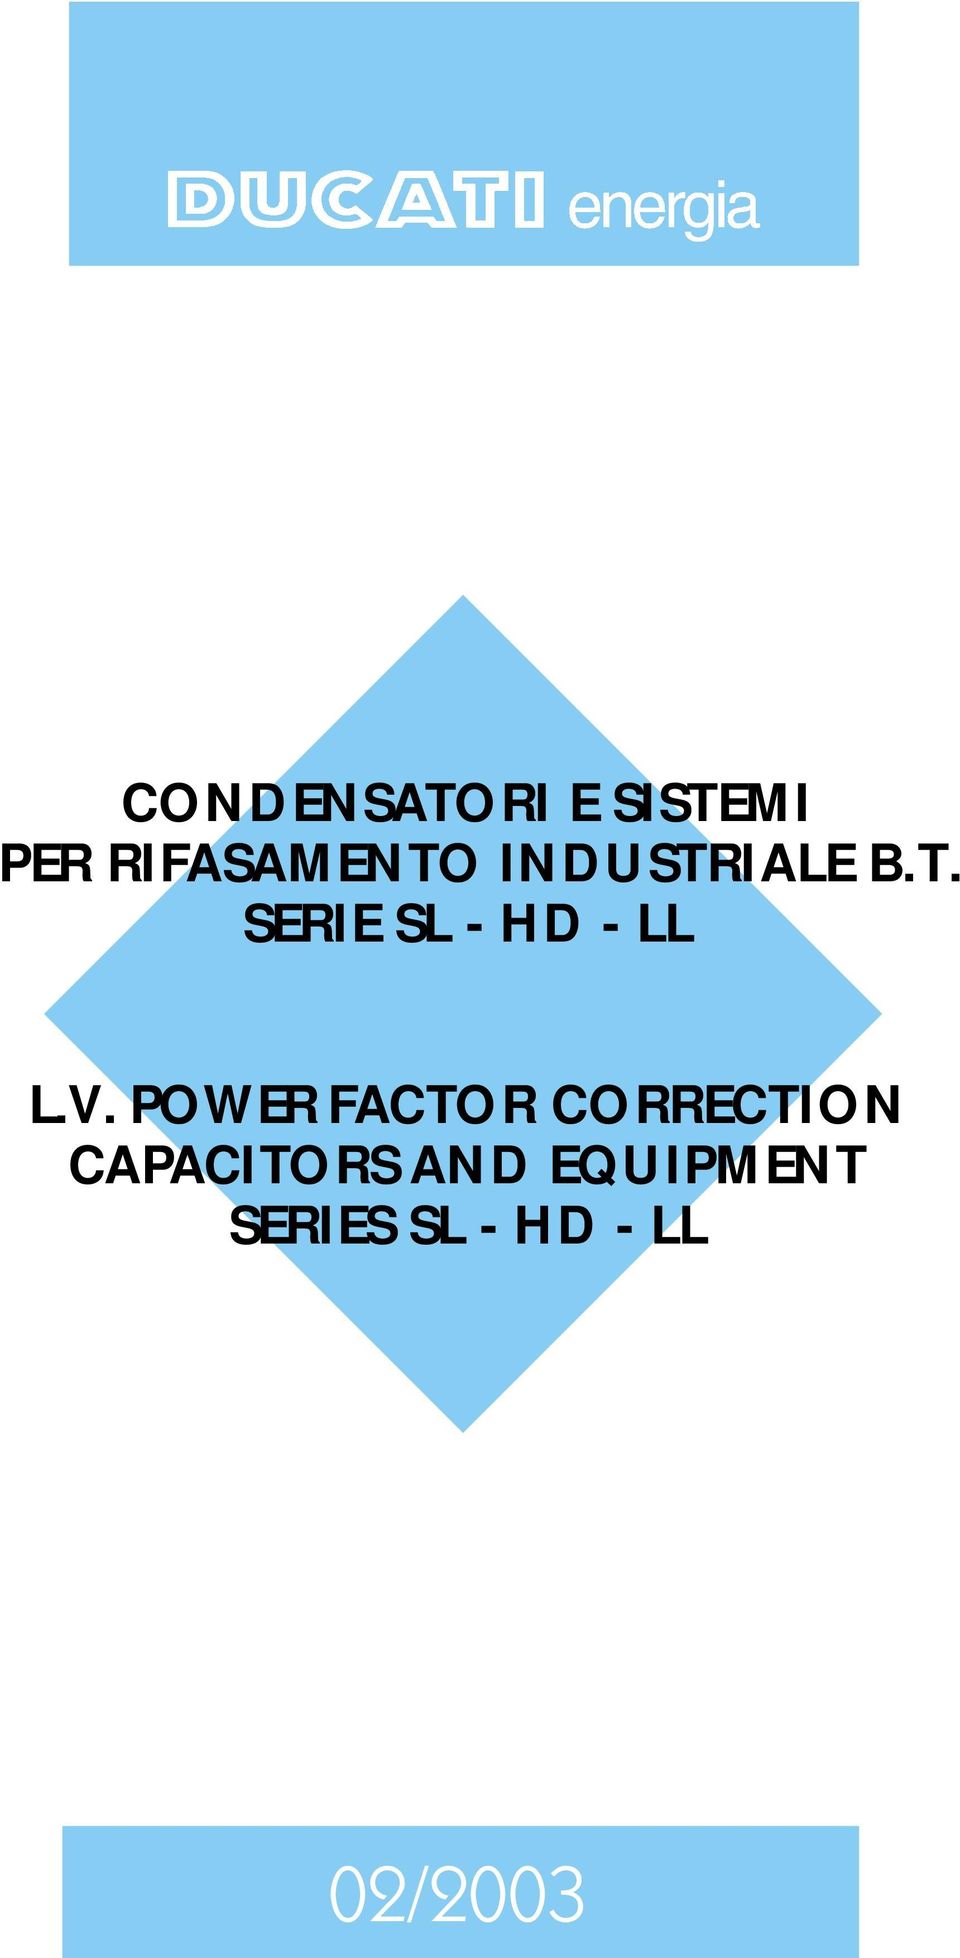 V. POWER FACTOR CORRECTION CAPACITORS